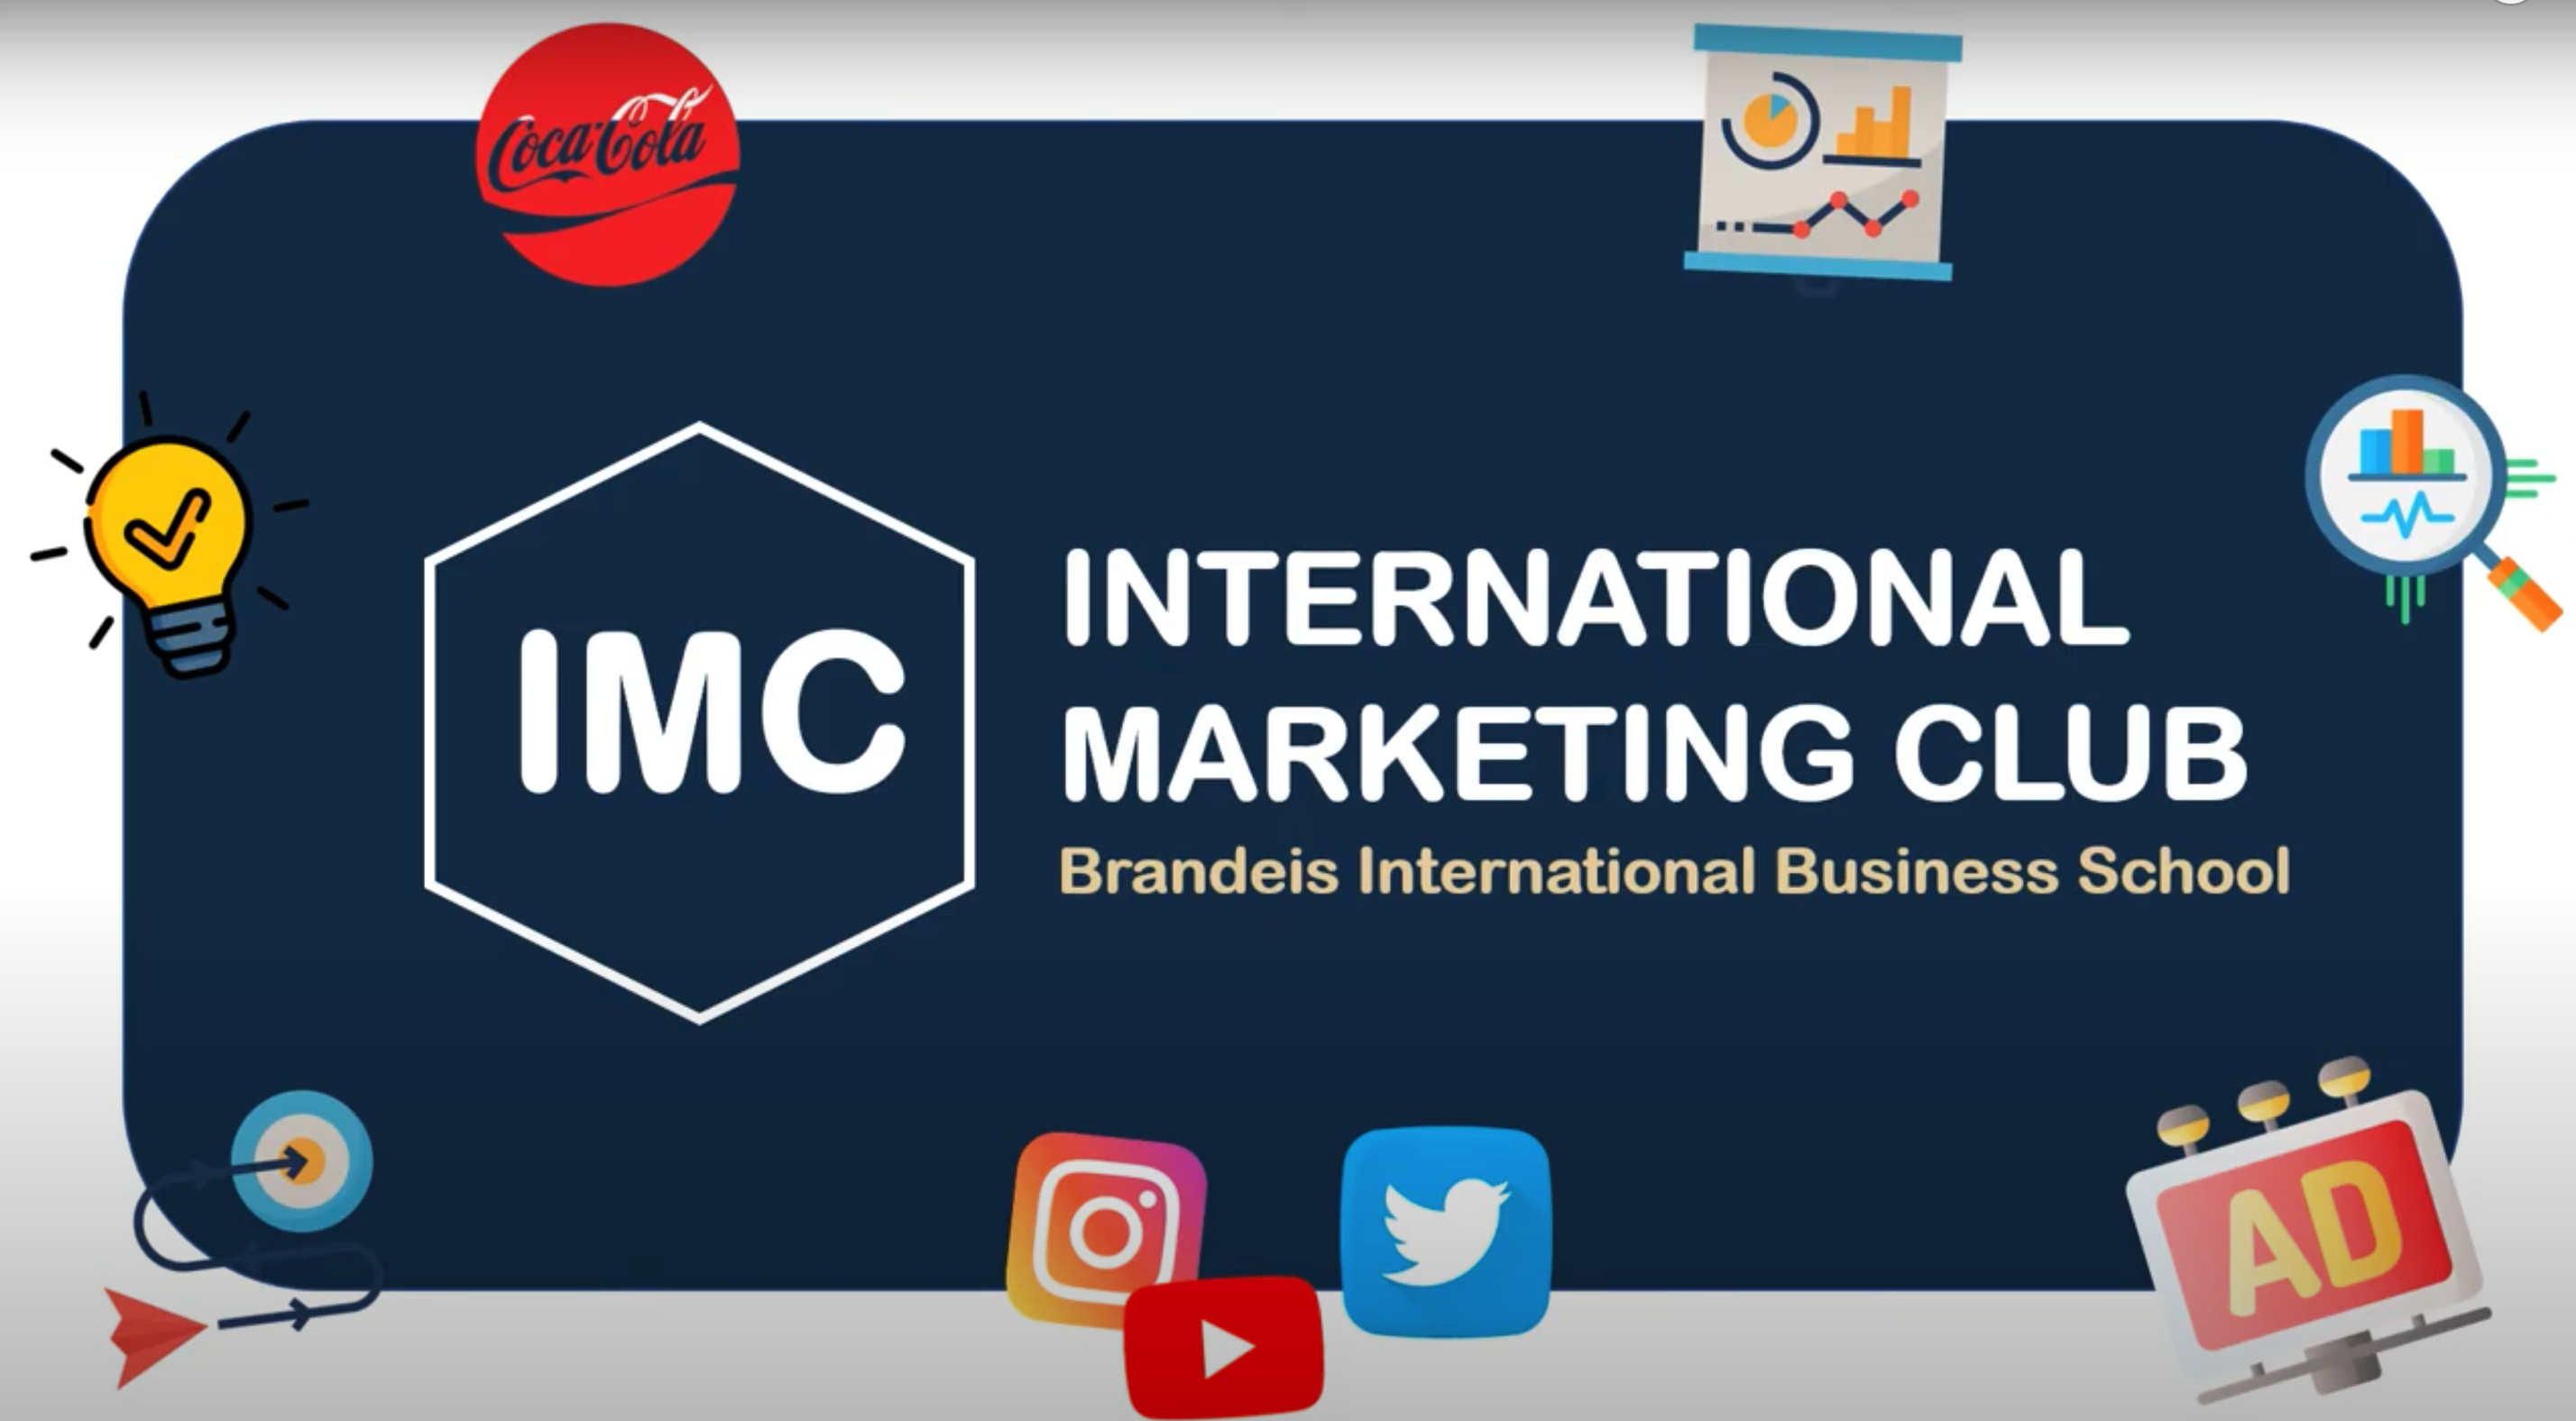 International Marketing Club Introduction 2020